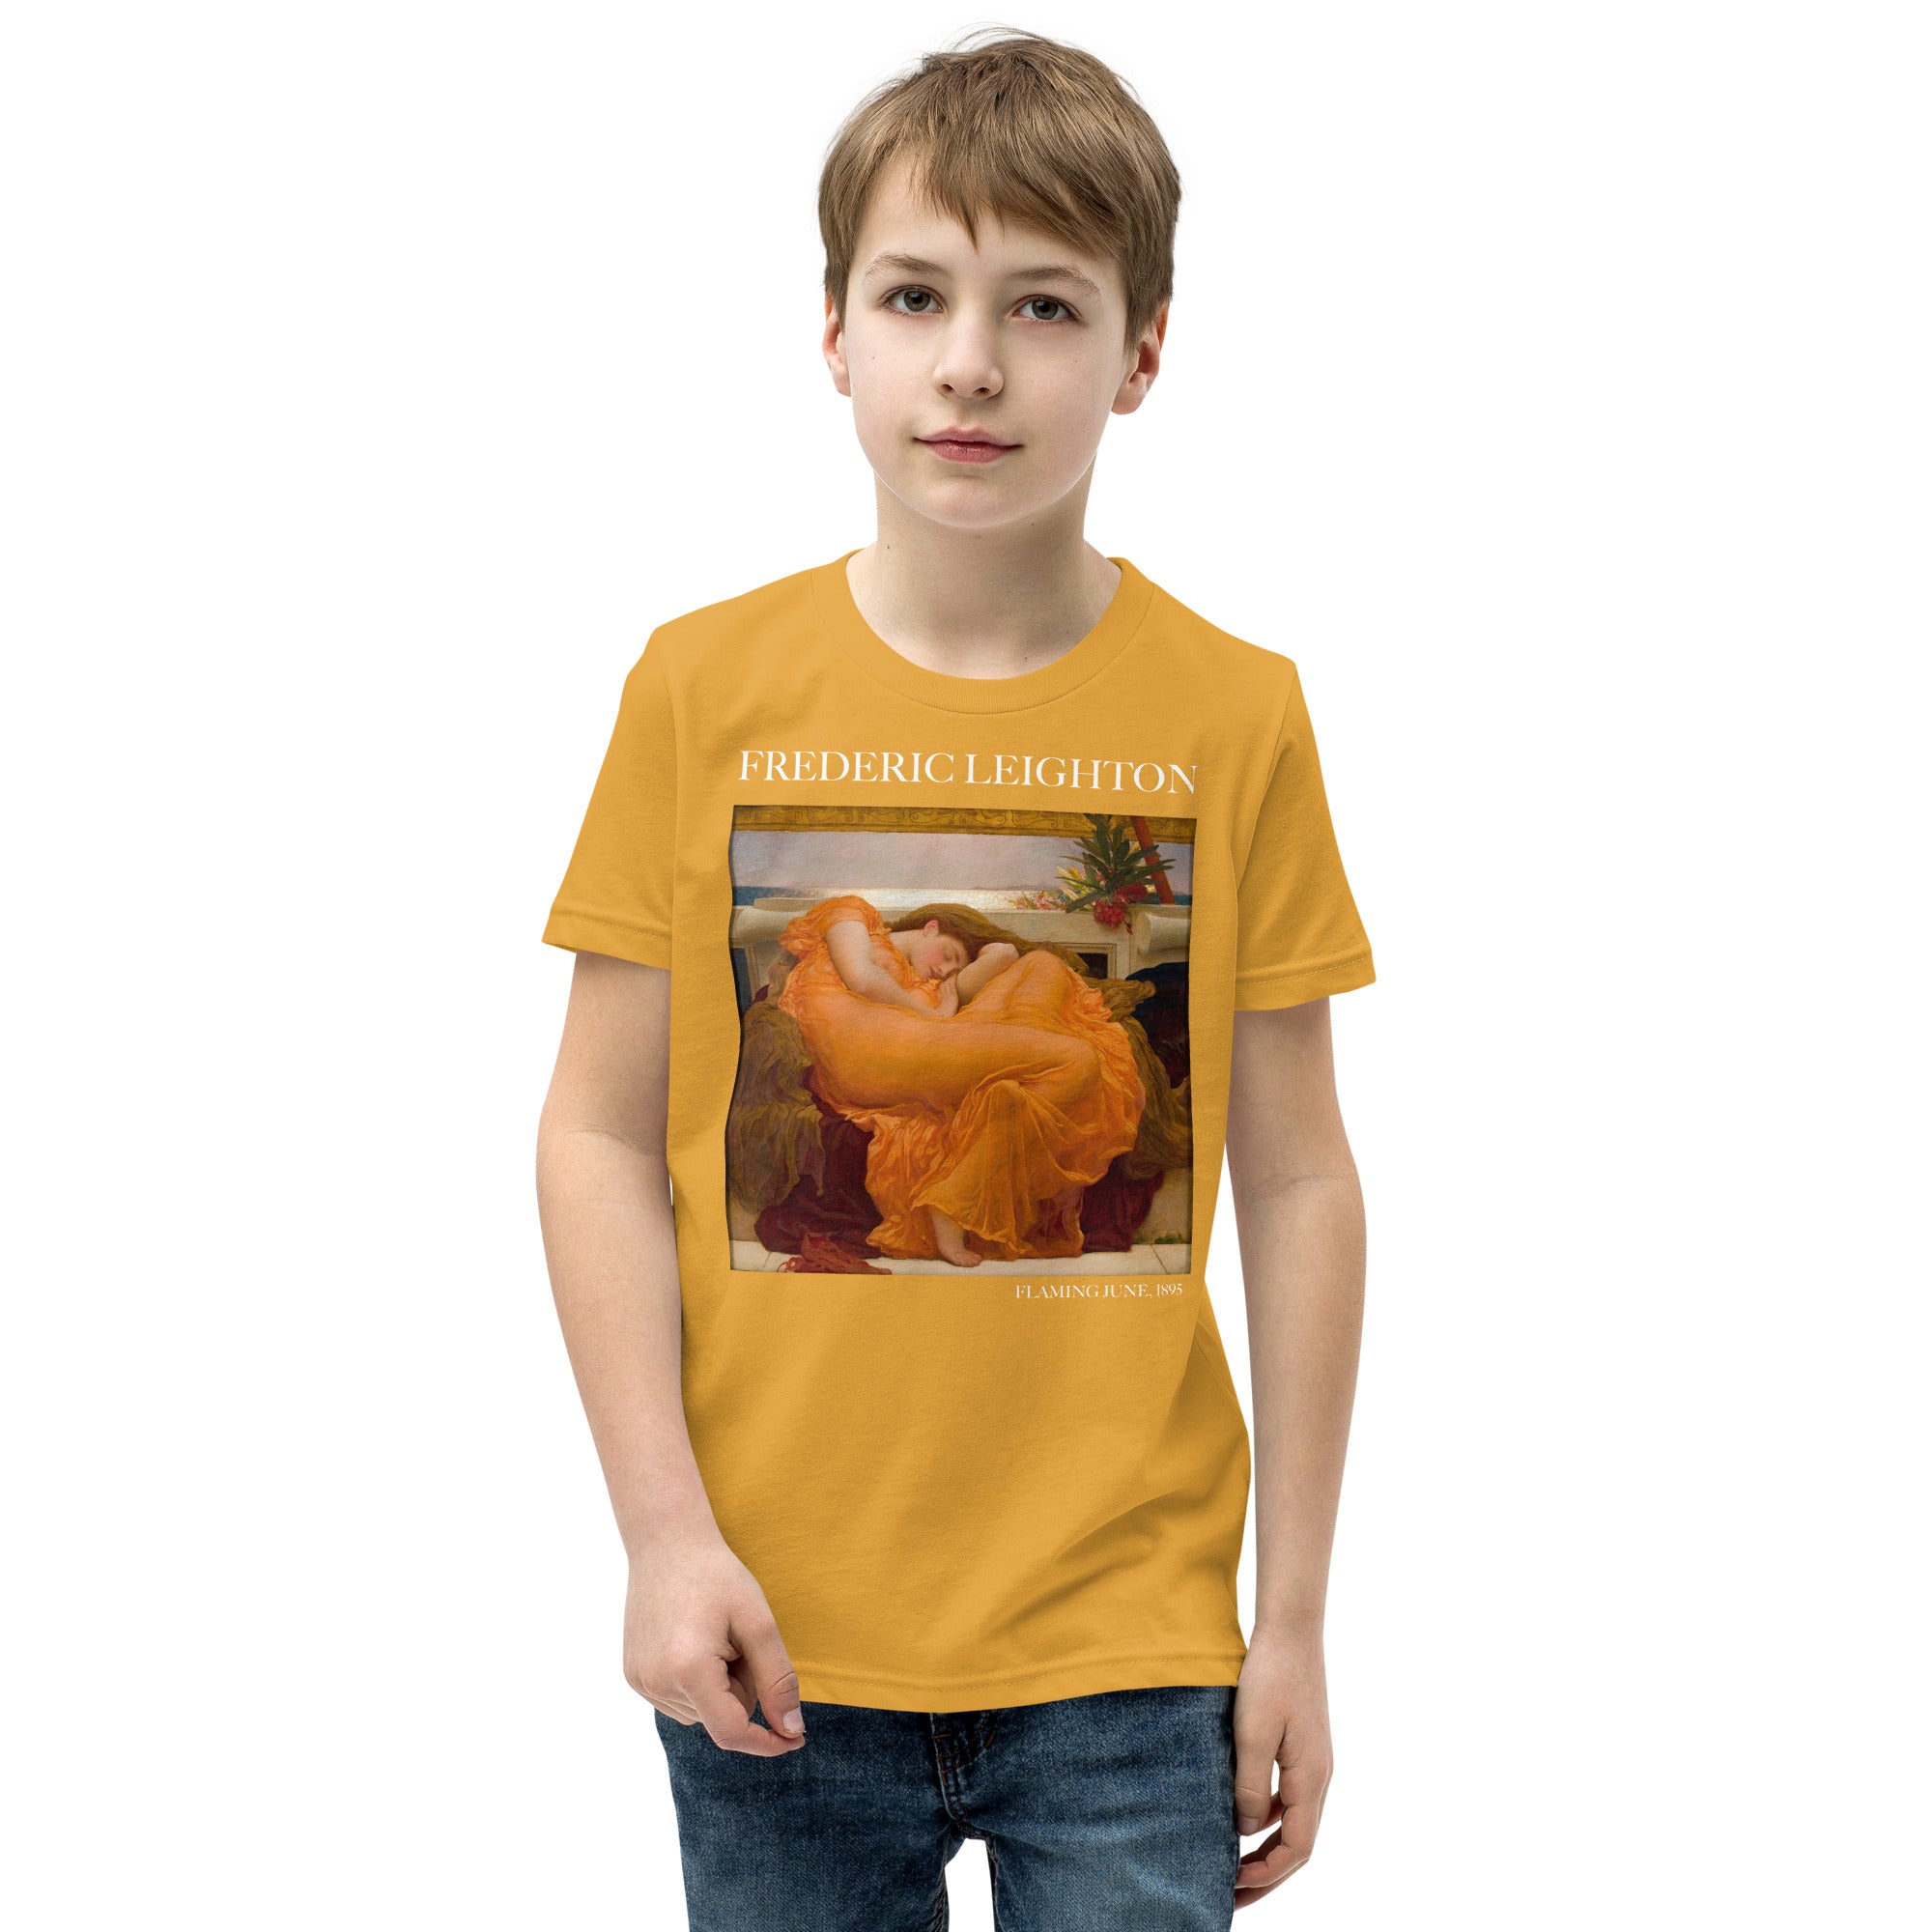 Frederic Leighton 'Flaming June' Berühmtes Gemälde Kurzärmeliges T-Shirt | Premium Jugend Art T-Shirt